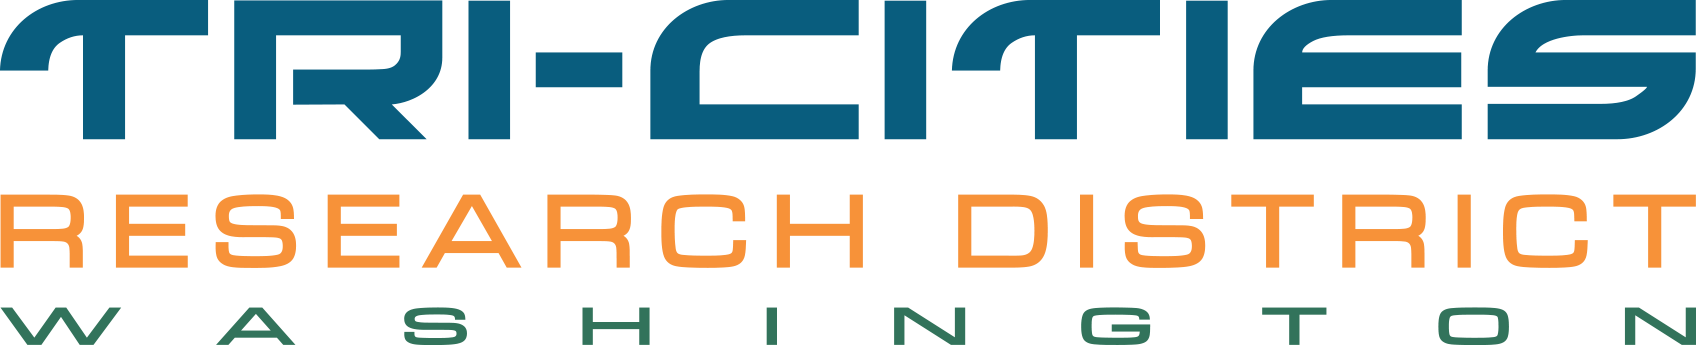 tcrd-logo-text